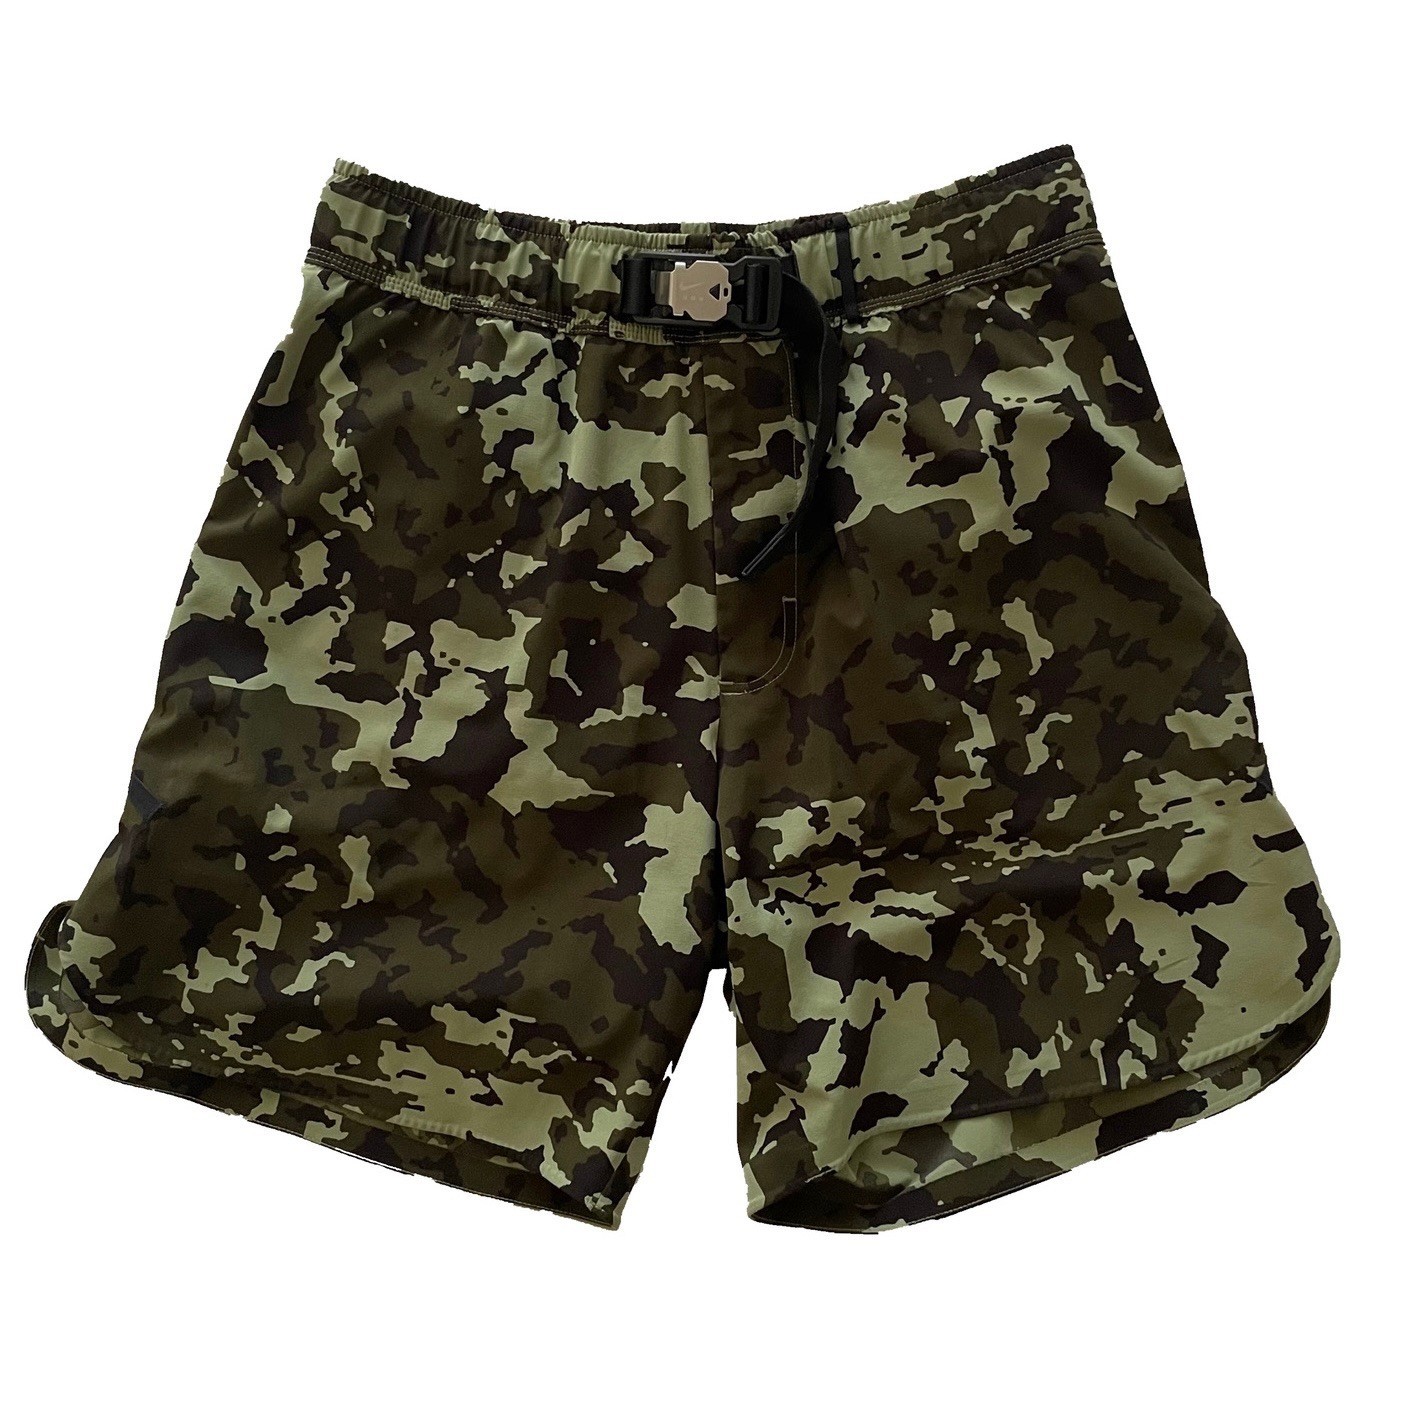 MMW camo shorts - 1